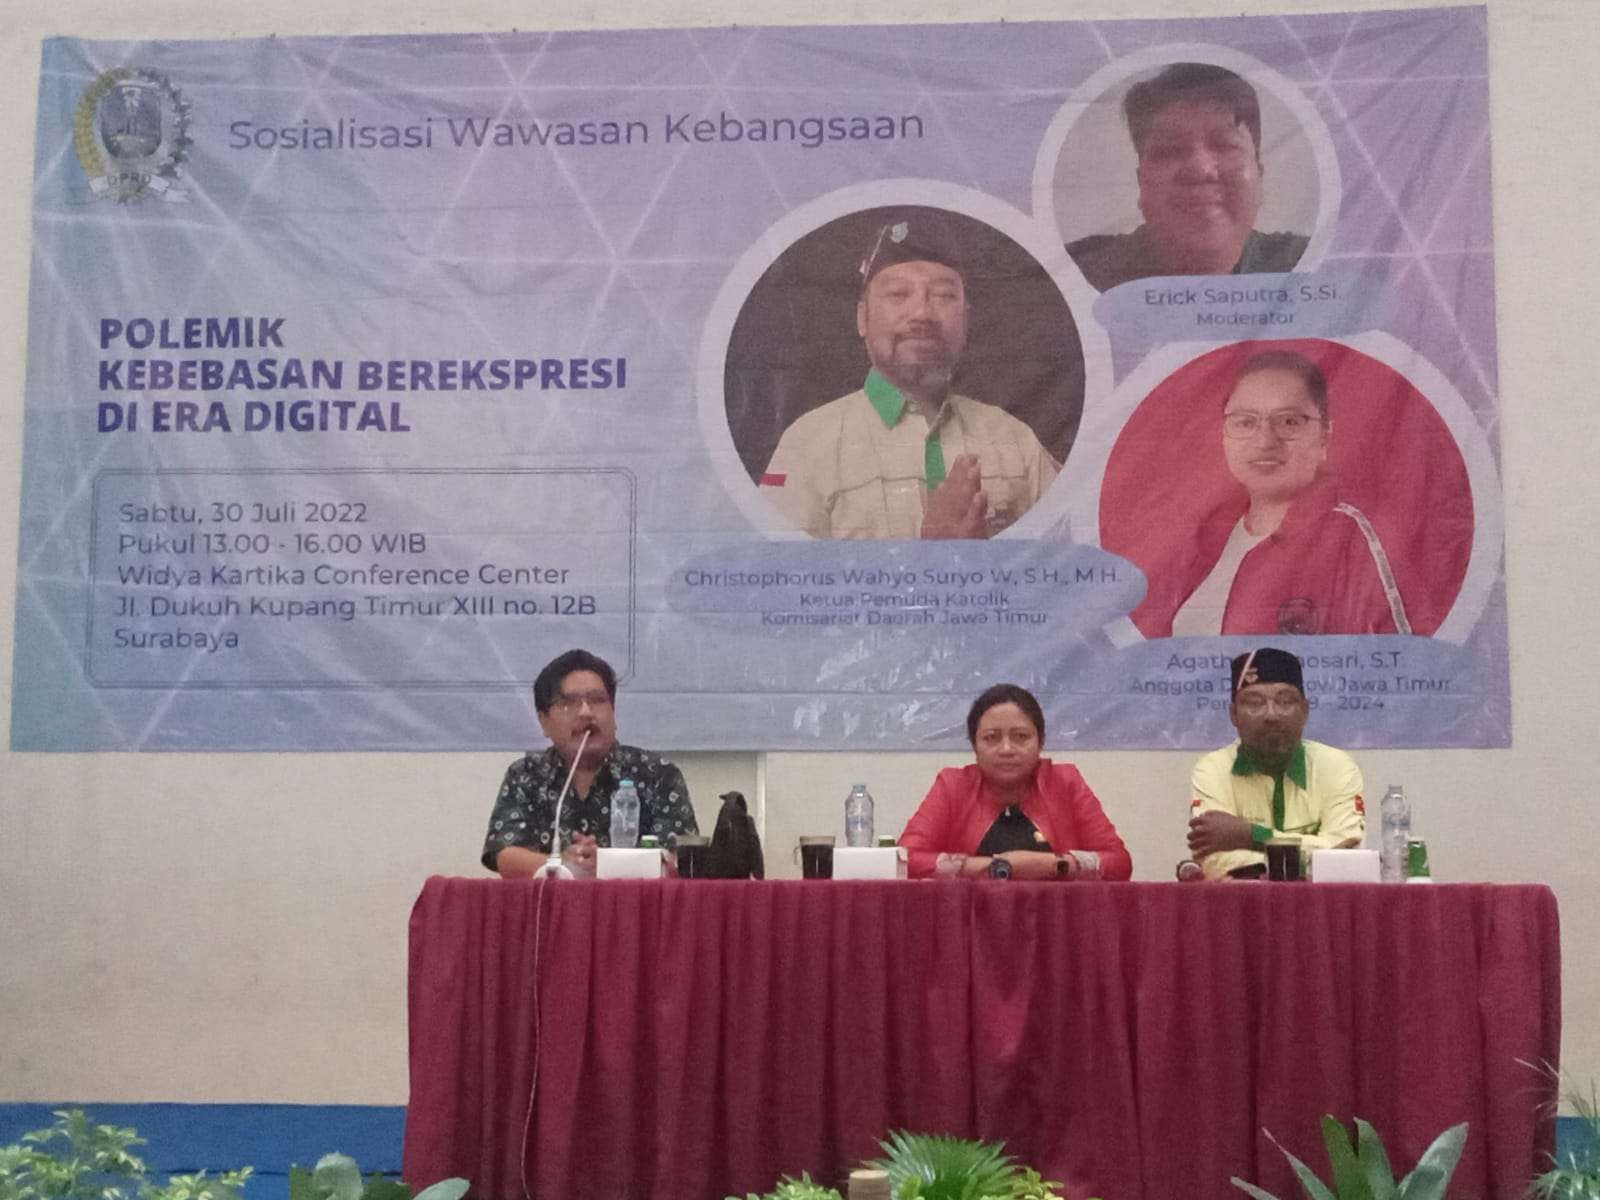 Anggota DPRD Jawa Timur Agatha Retnosari di acara sosialisasi wawasan kebangsaan dengan tema "Polemik Kekebasan Berekpresi di Era Digital" di Surabaya, Sabtu 30 Juli 2022.(Foto: Istimewa)